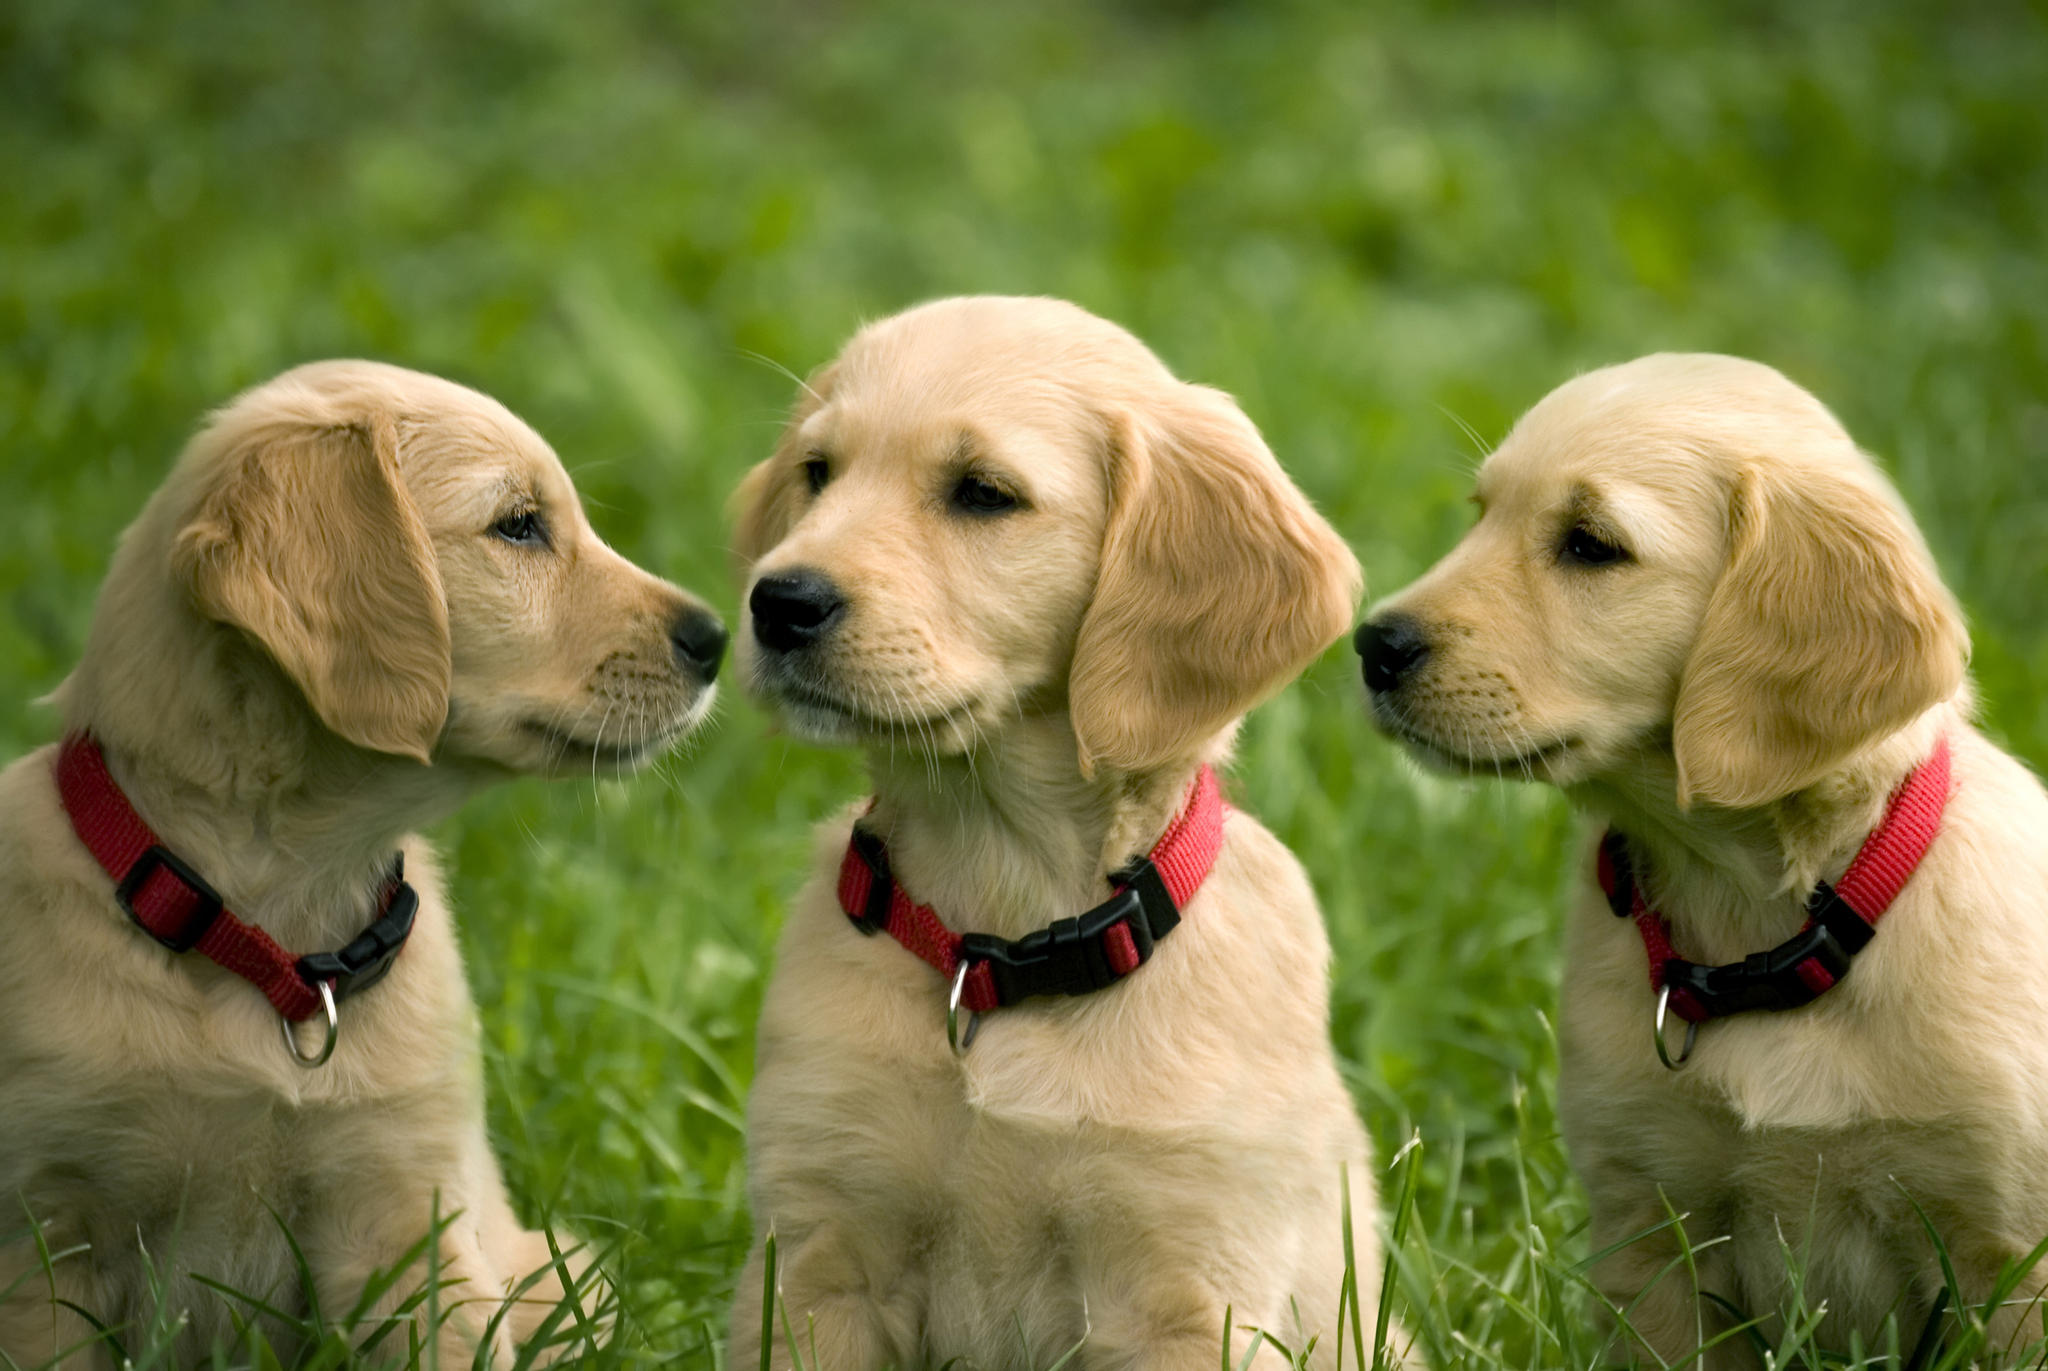 Chien-gris Puppies: Chien Gris Puppies Of Golden Retriever Breed